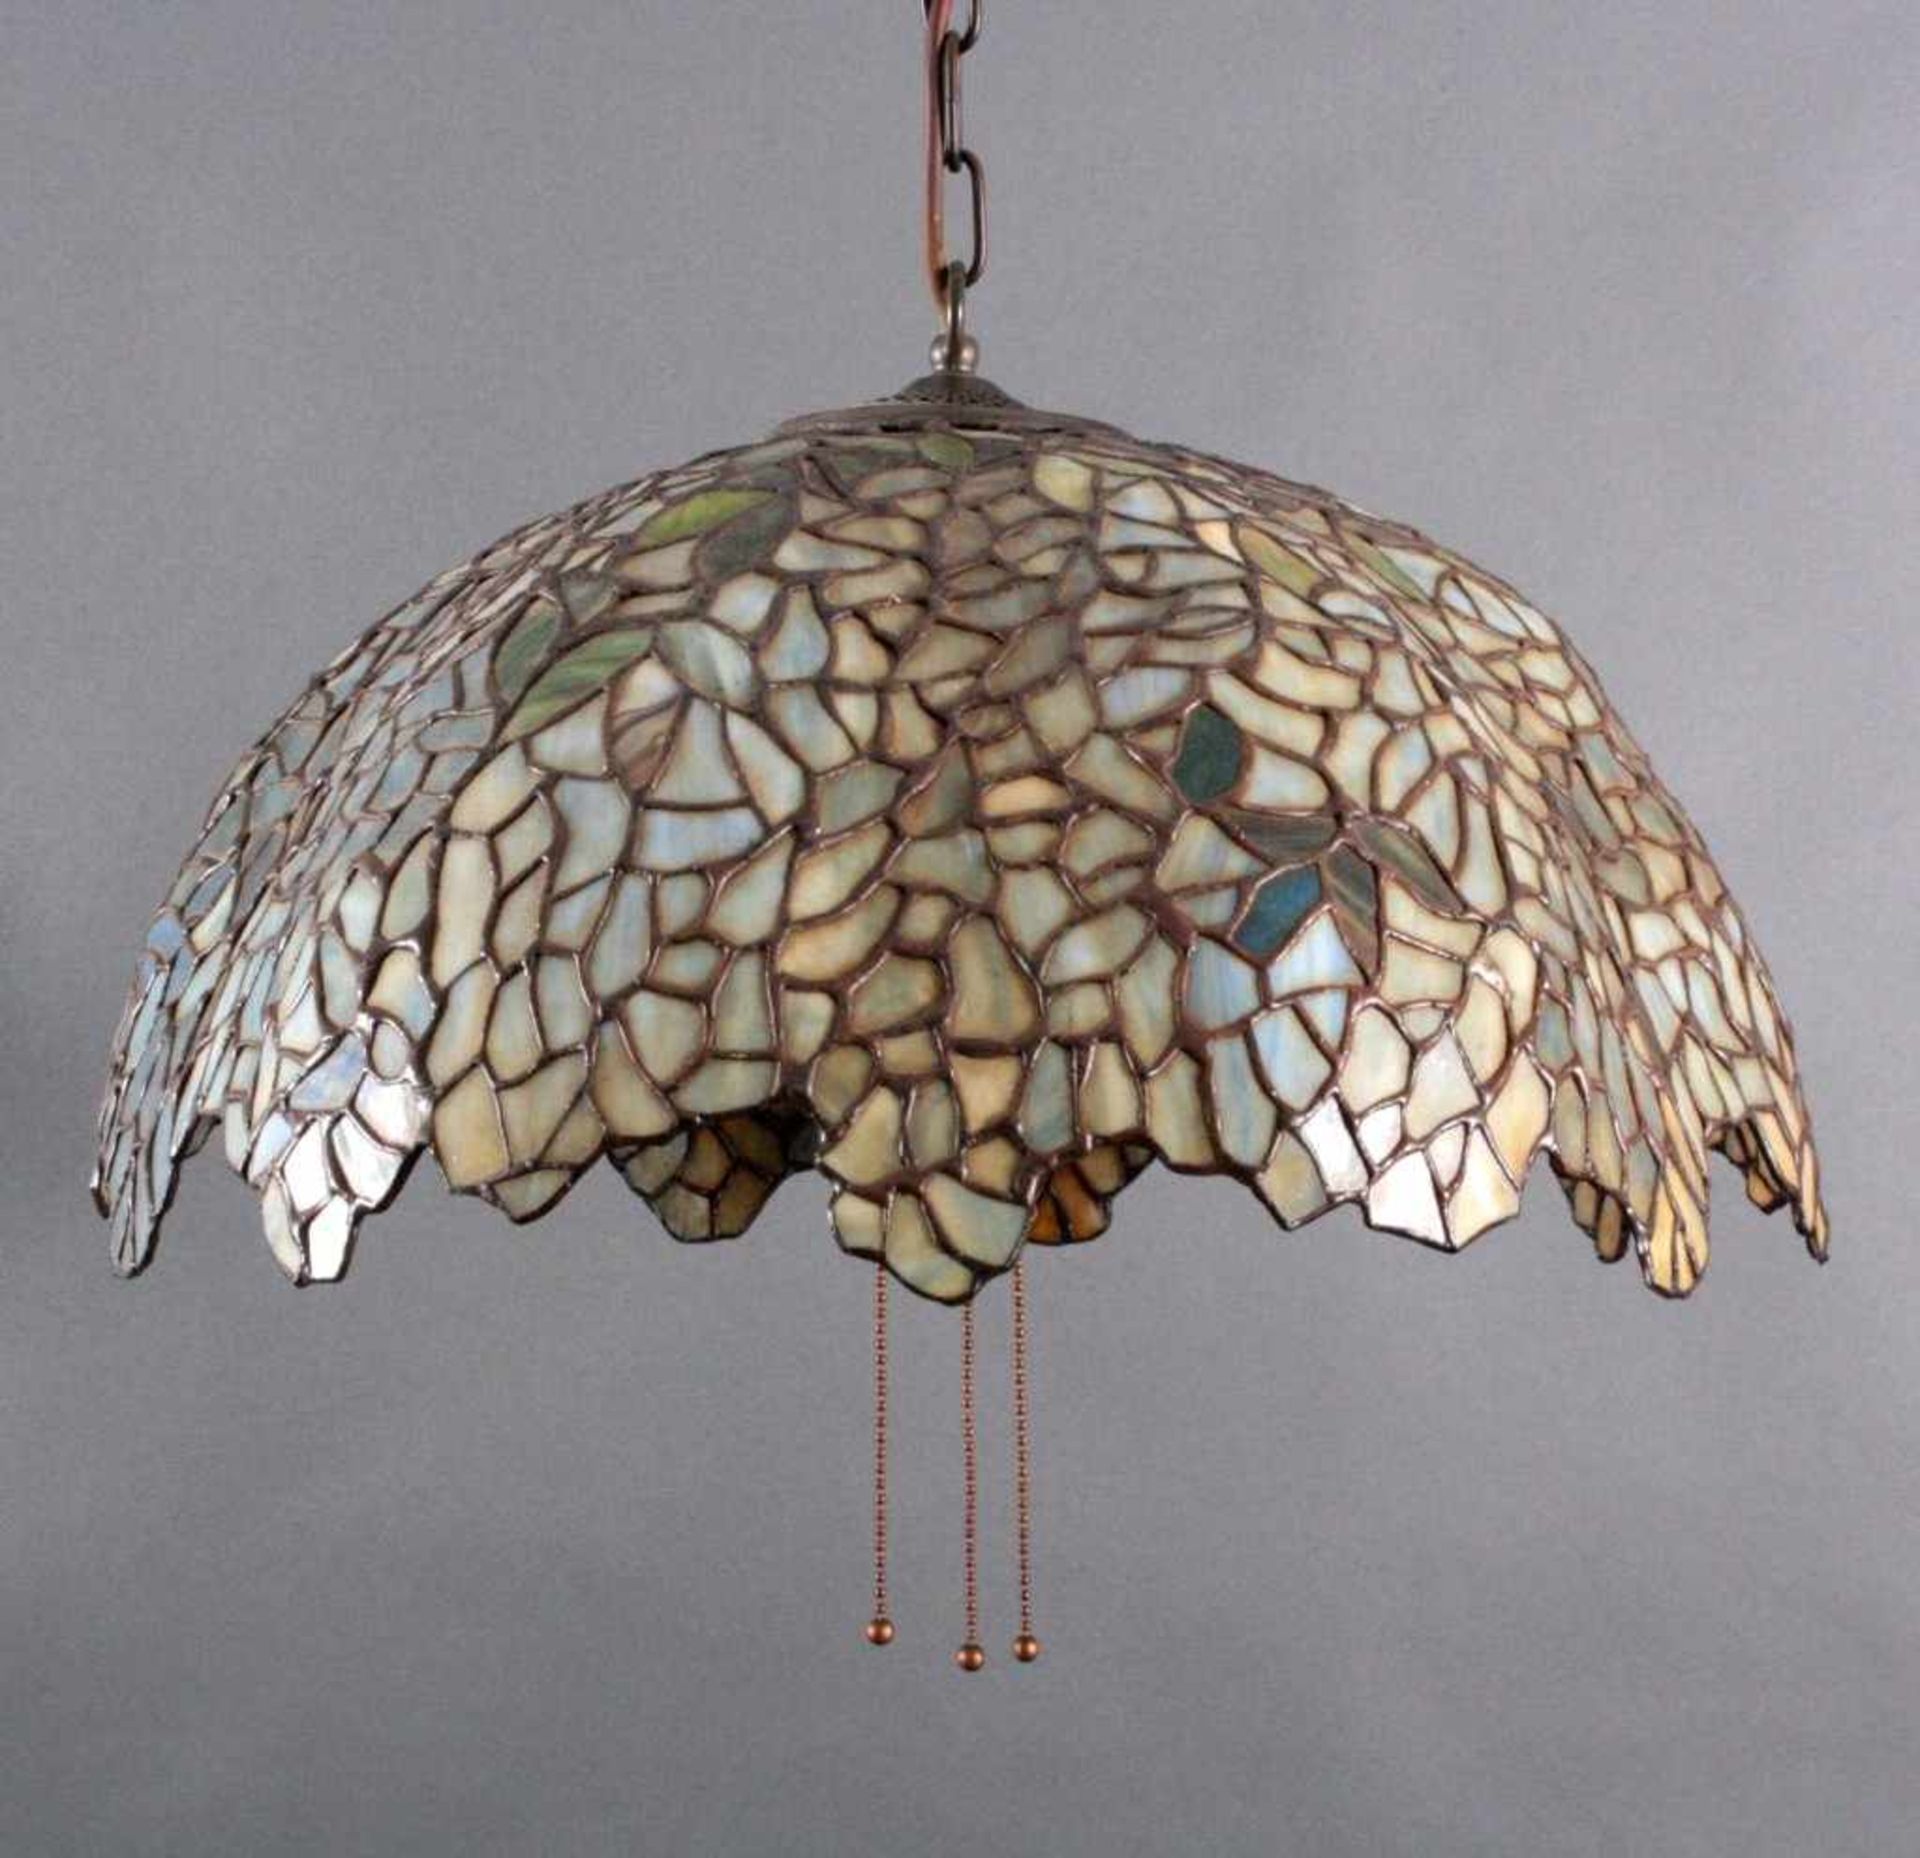 Tiffany-Stil Deckenlampe3-flammig, Höhe des Schirms 25 cm, D- 49 cm.Provenienz: Aus dem Nachlass des